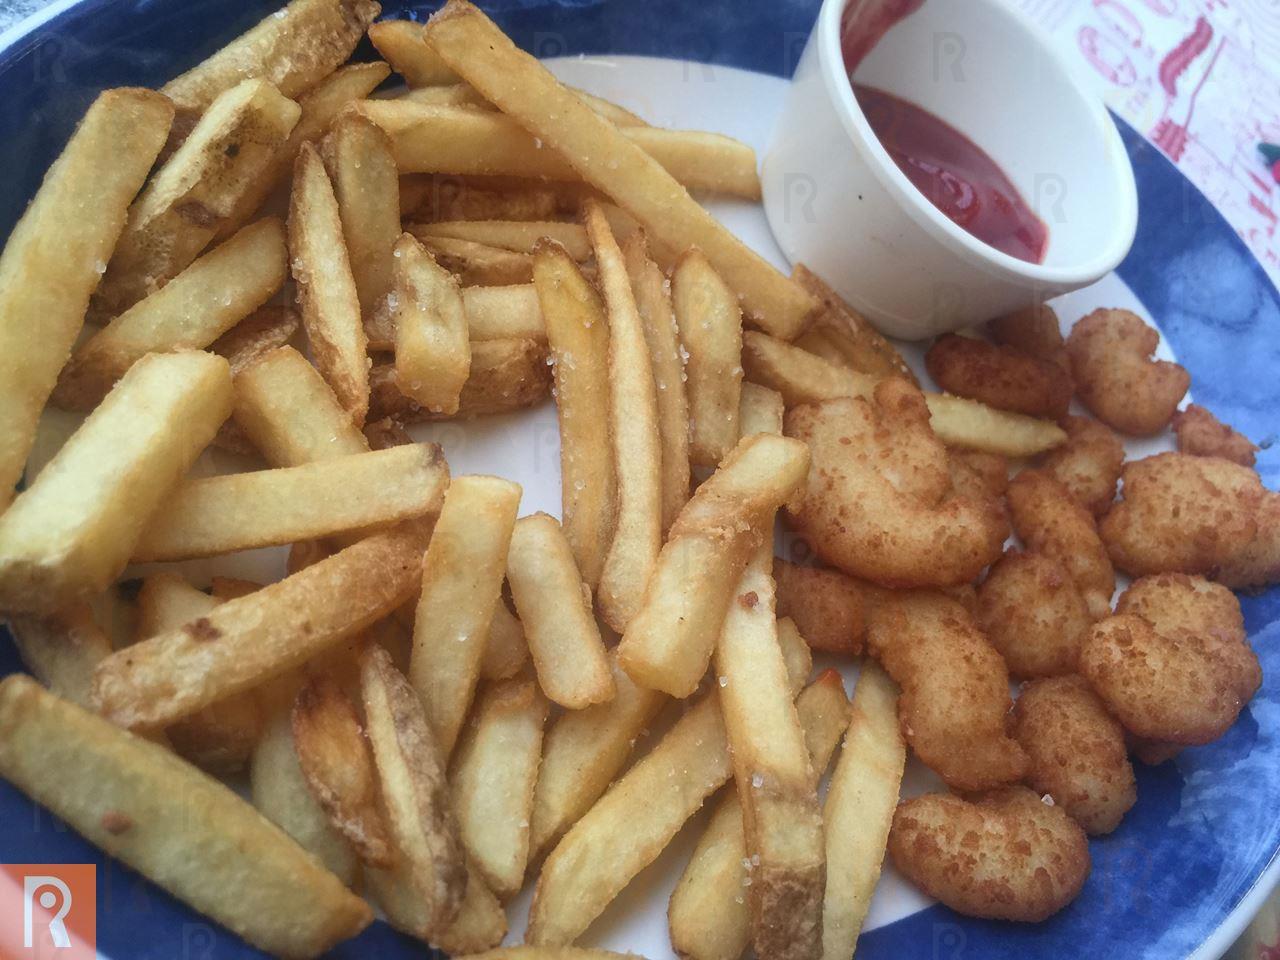 Fried Shrimp and Chips